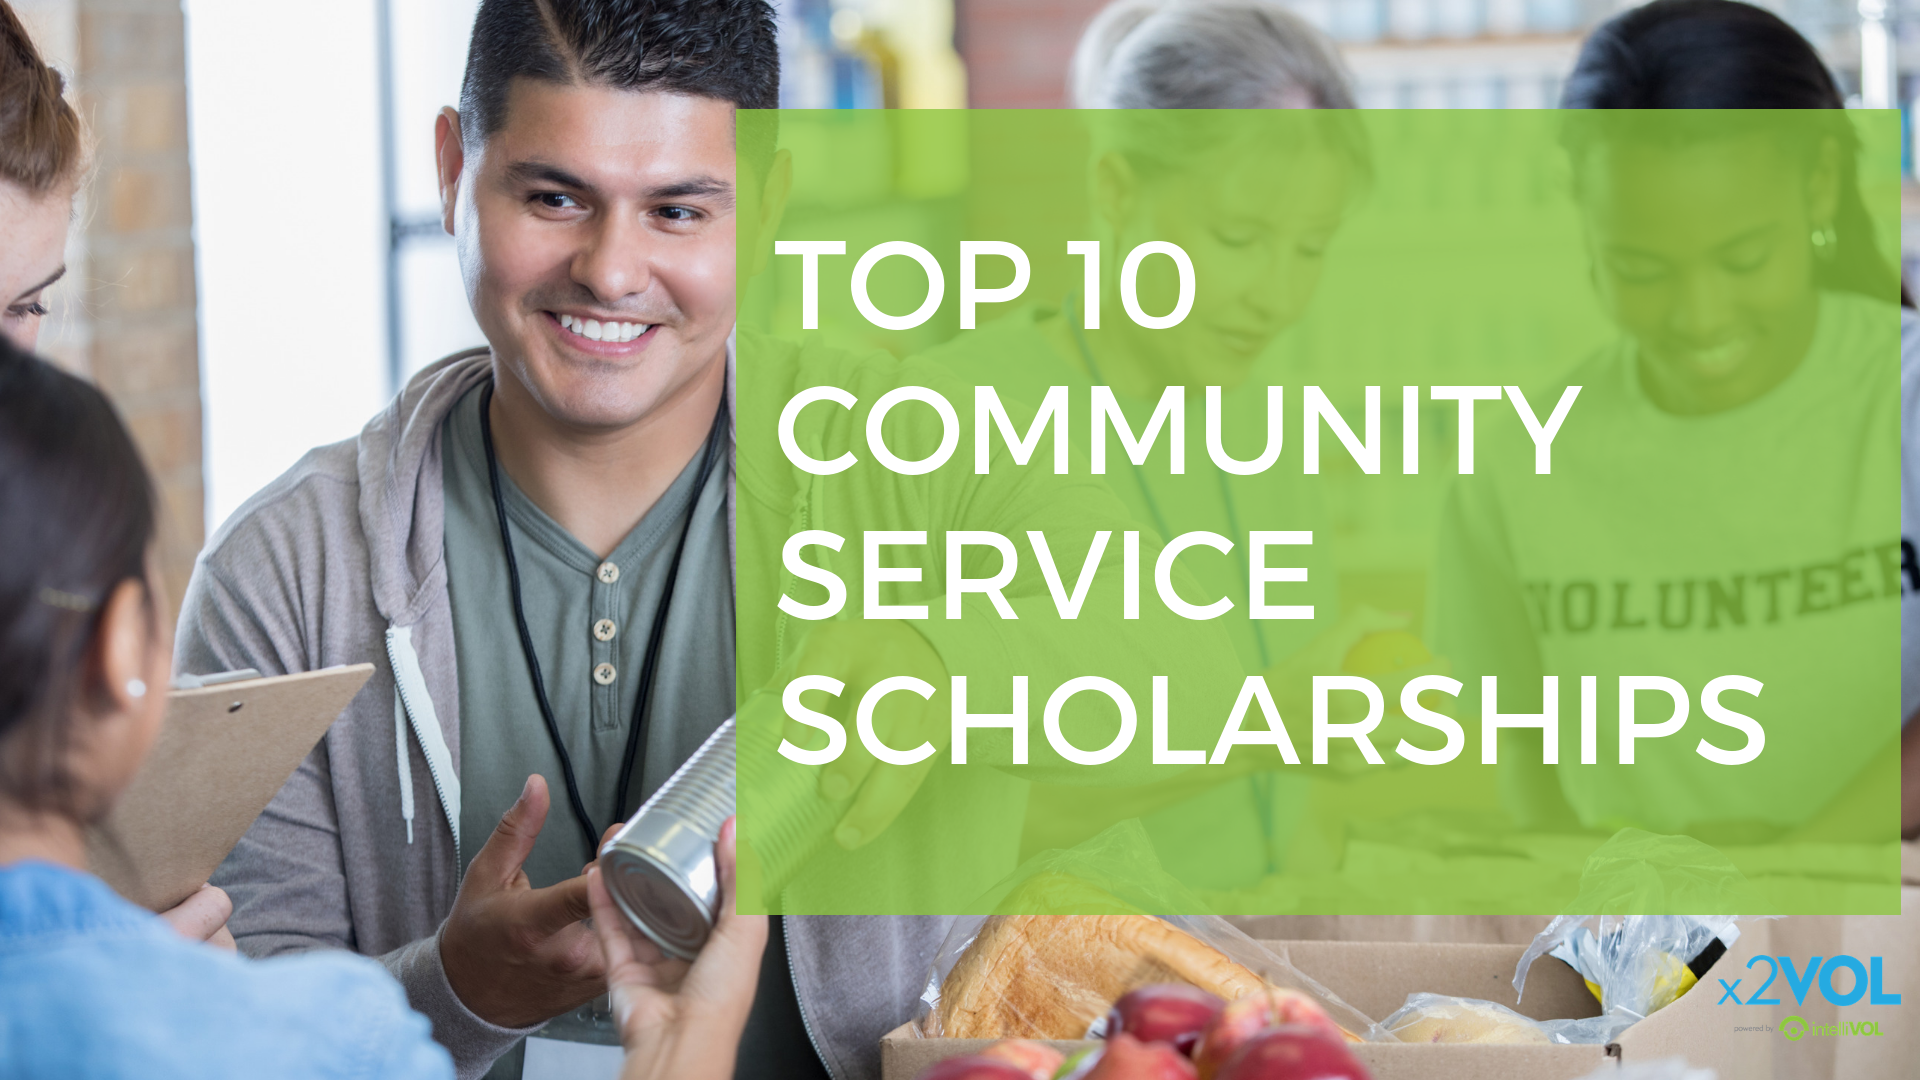 Top 10 Community Service Scholarships